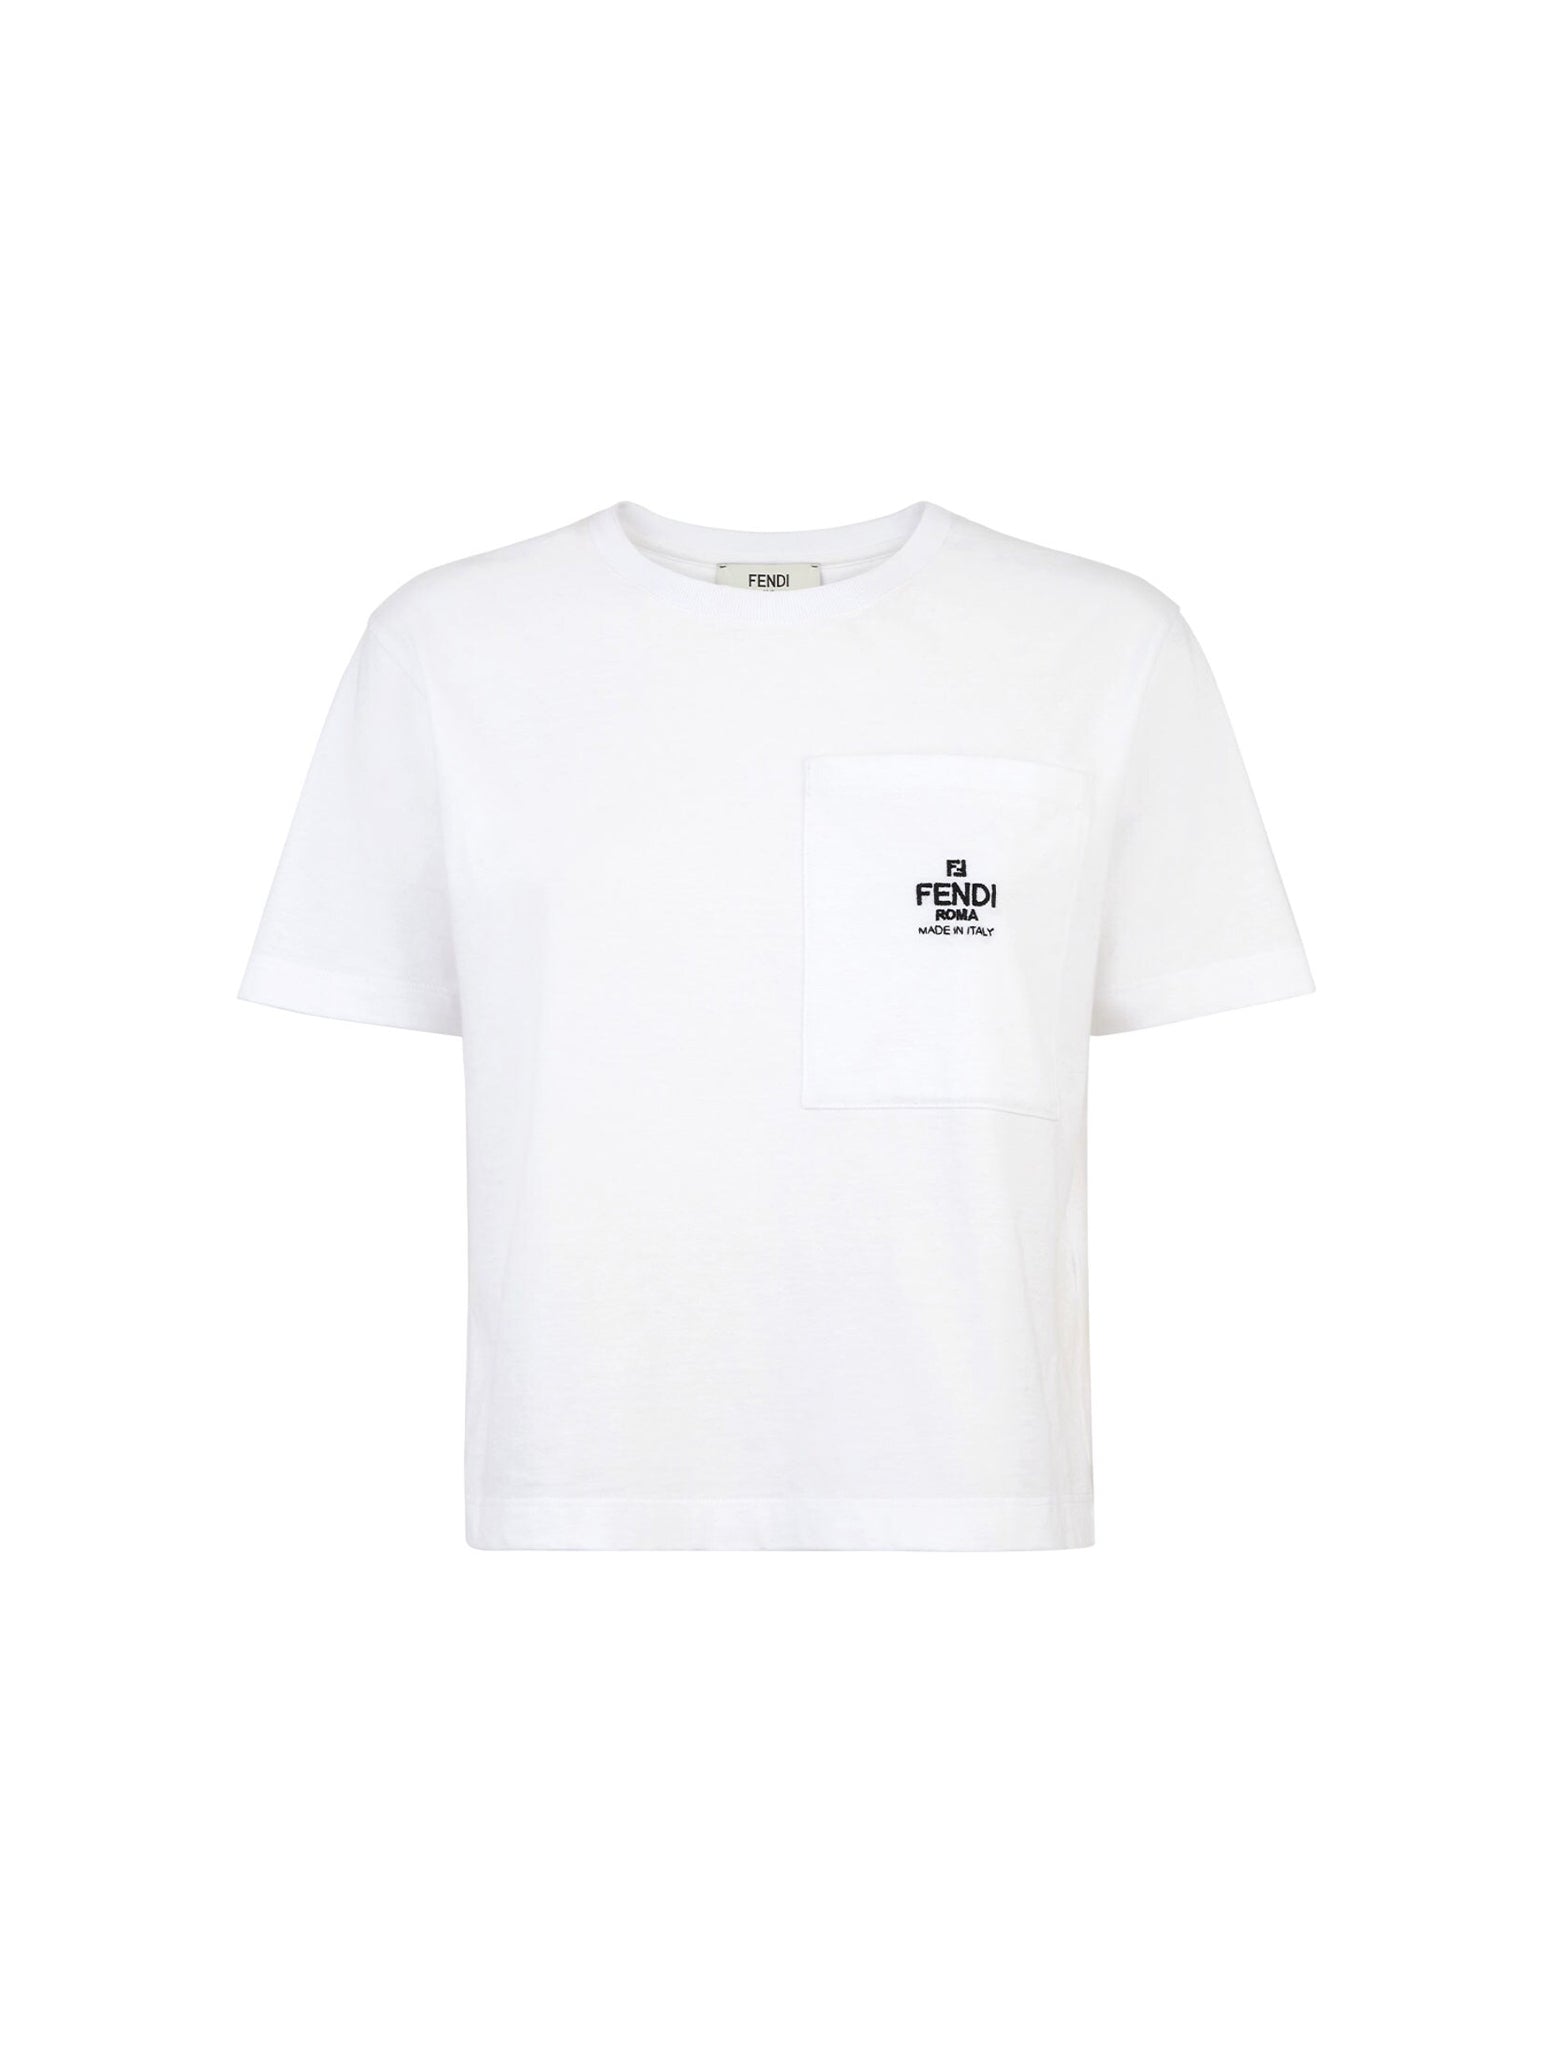 White jersey T-shirt